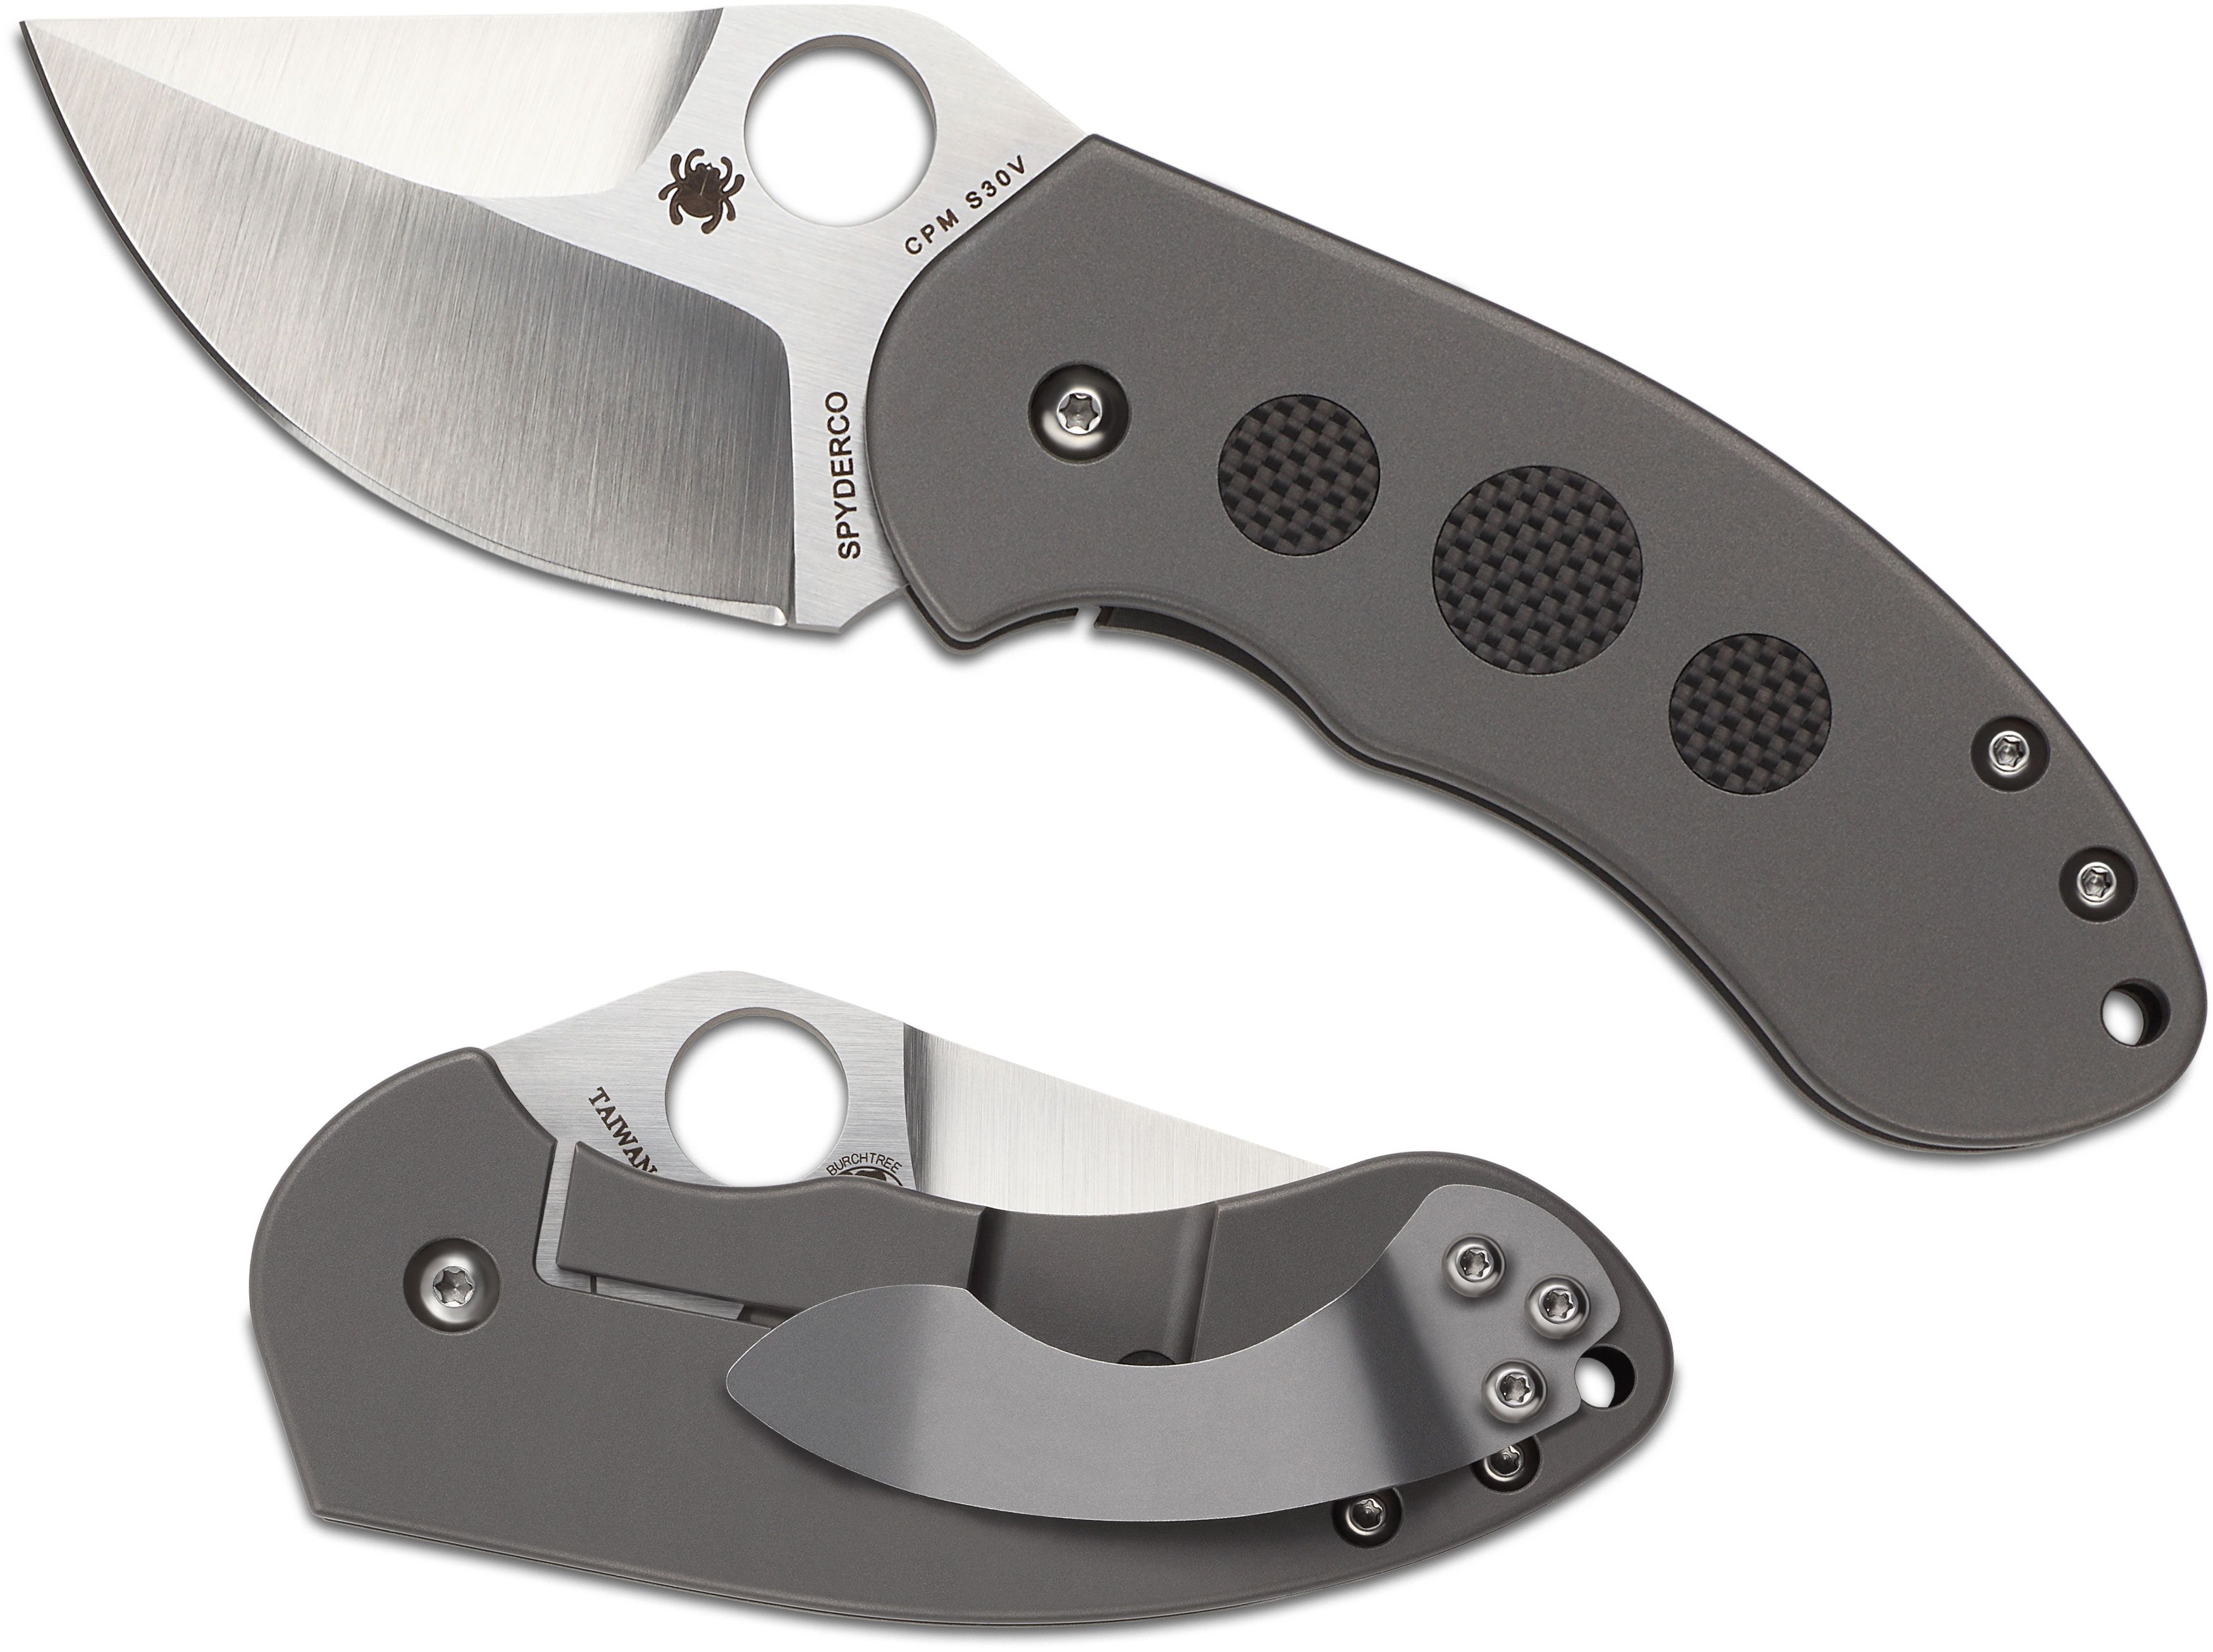 Spyderco Navaja Knife - C147CFP - Discontinued Item - Serial # - BNIB